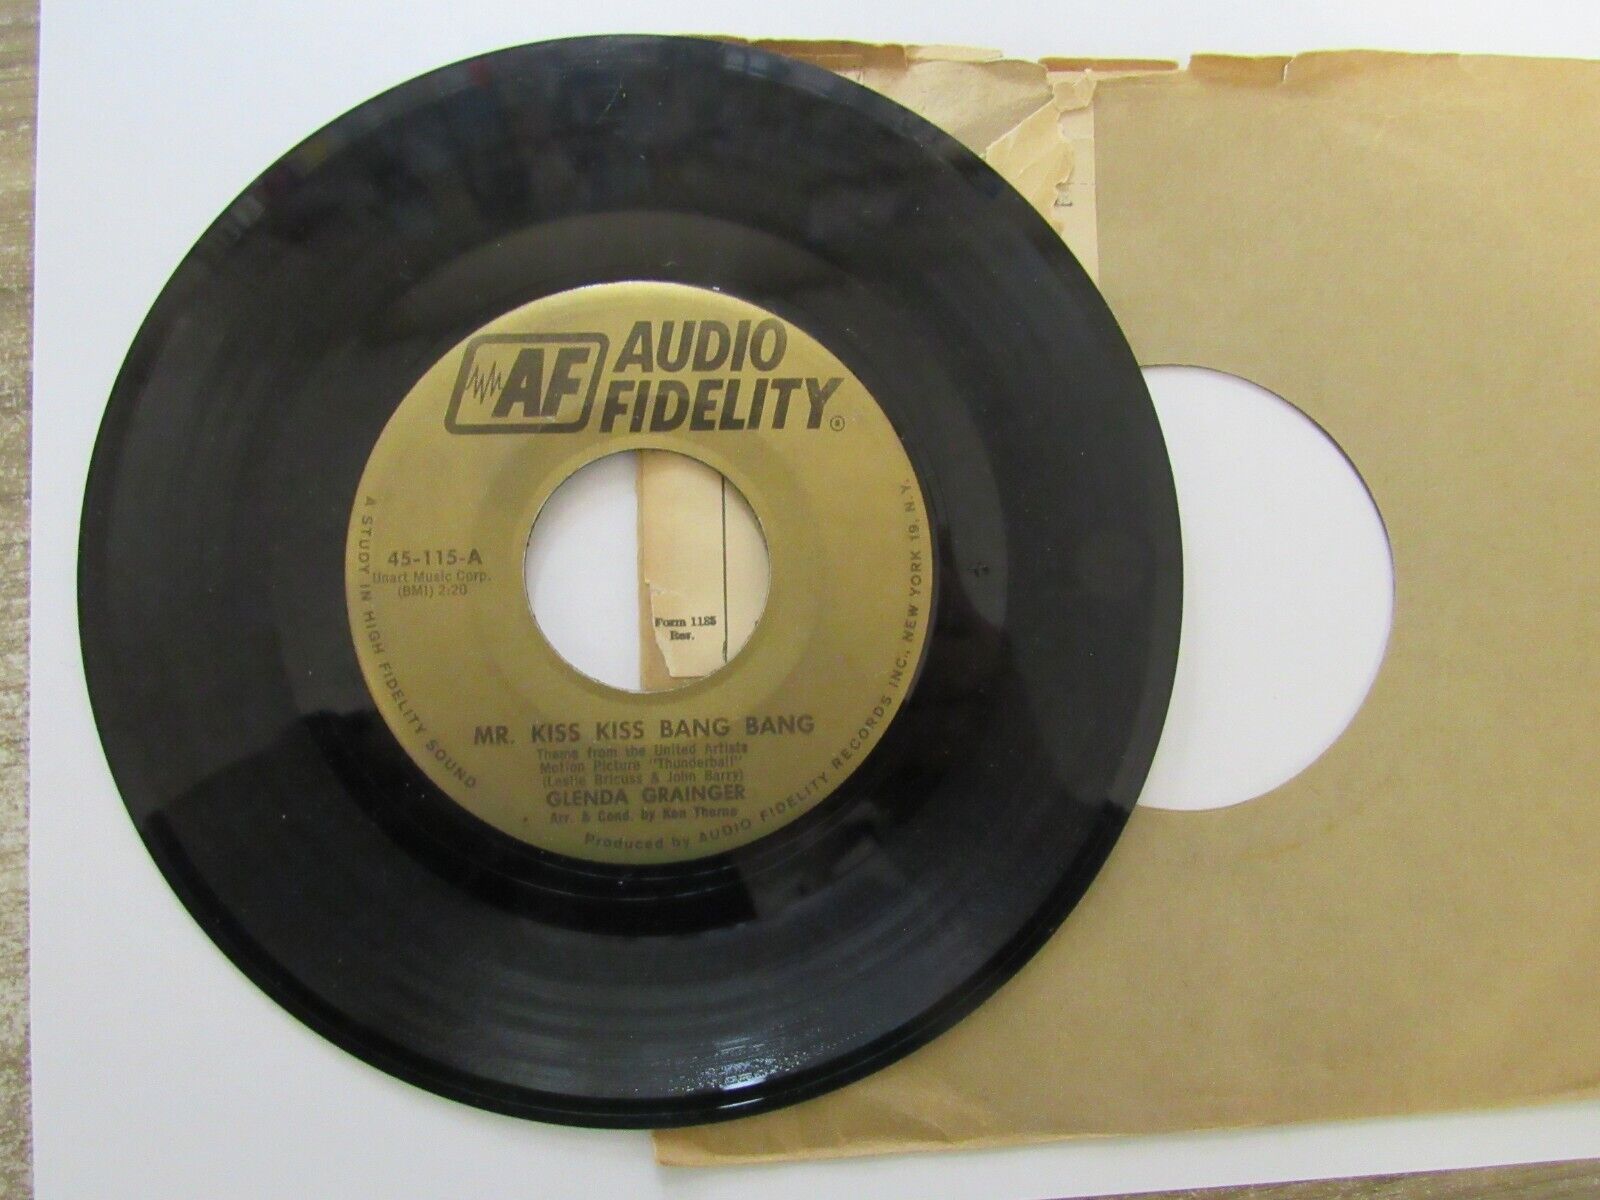 Old 45 RPM Record - Audio Fidelity 45-115 - Glenda Grainger - Mr. Kiss Kiss Bang